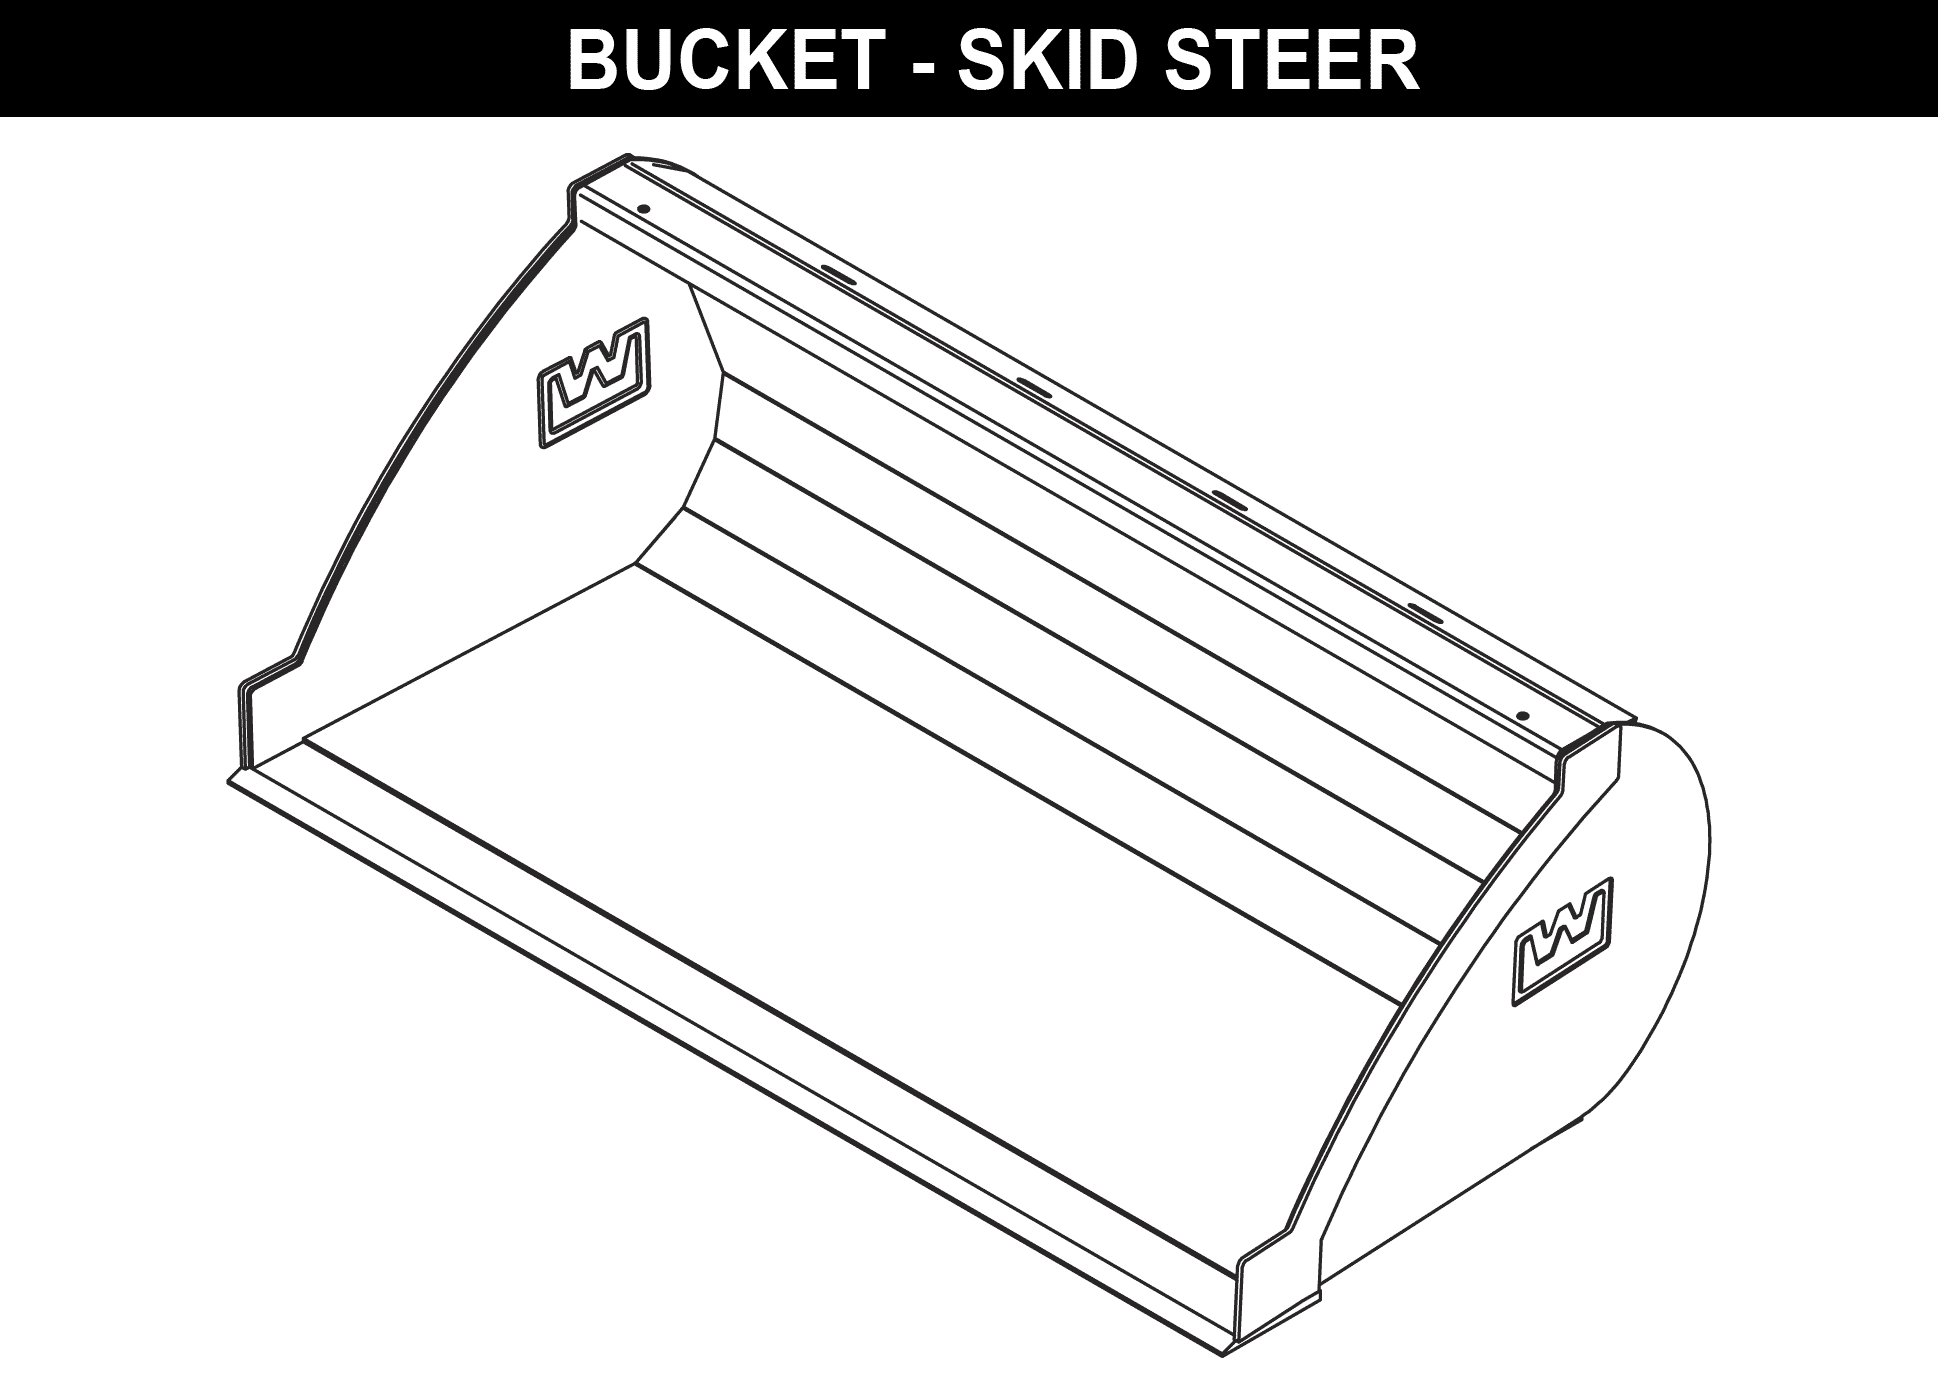 Bucket-Skid Steer